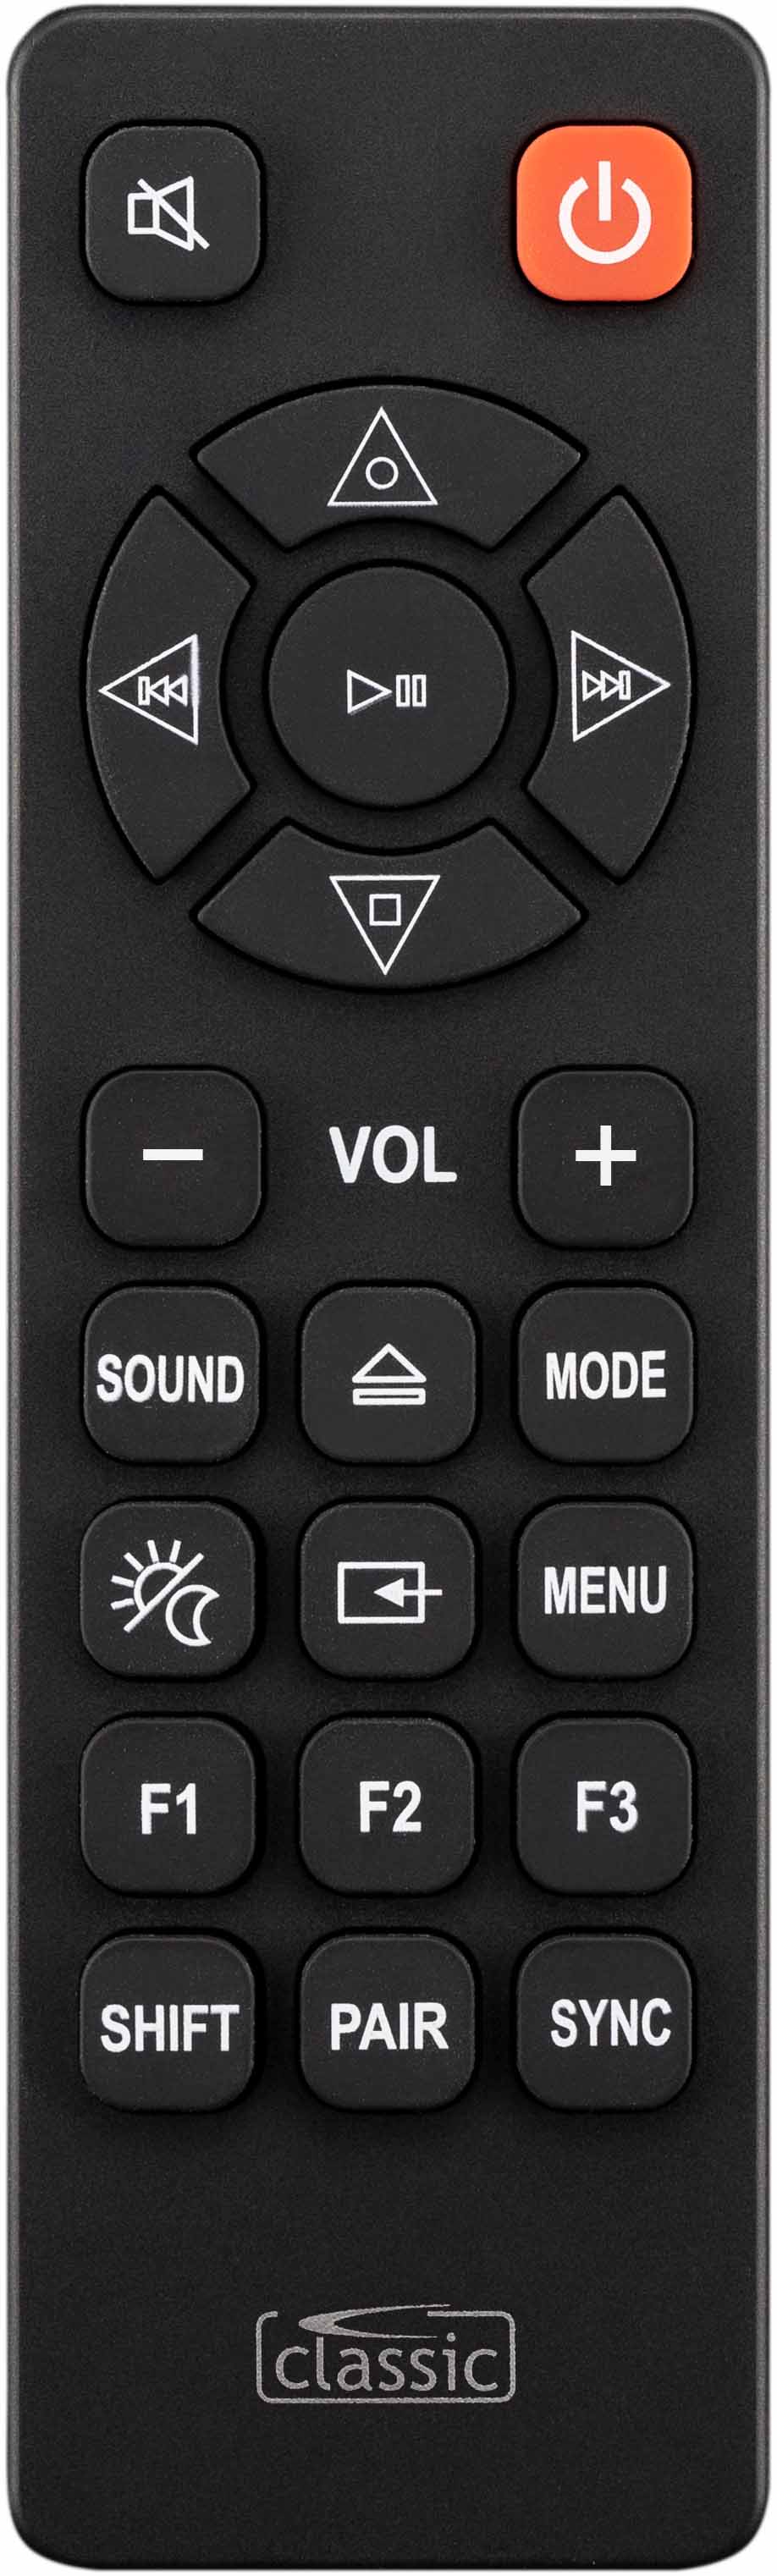 JVC RM-STHD337B Remote Control Alternative